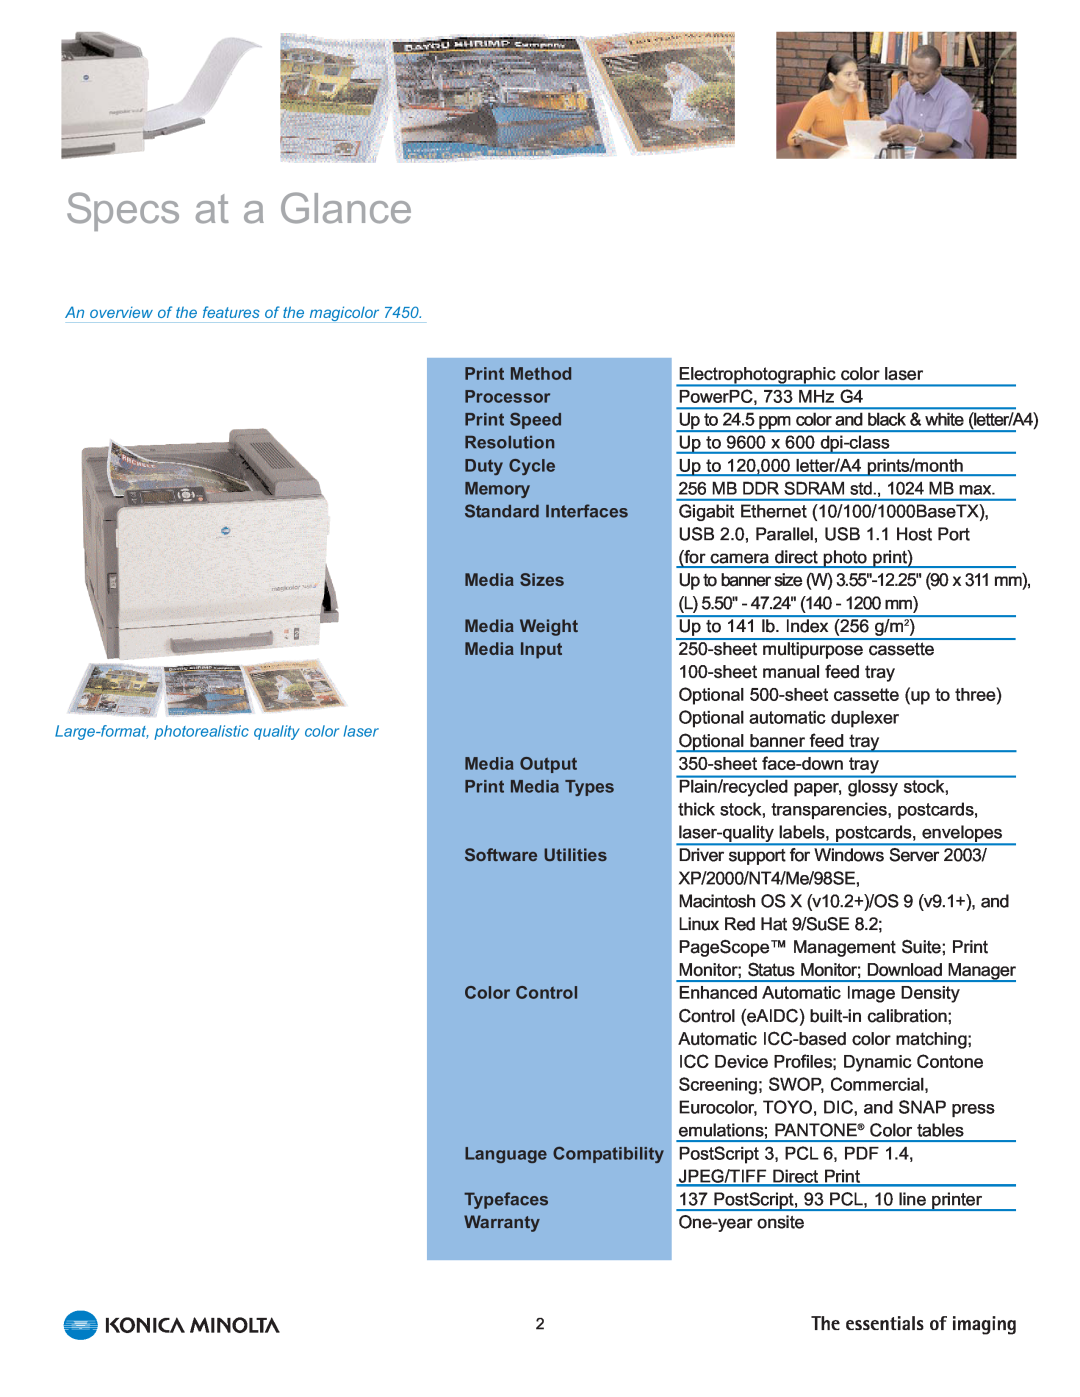 Konica Minolta 7450 Specs at a Glance, Print Method, Processor, Print Speed, Resolution, Duty Cycle, Memory, Media Sizes 